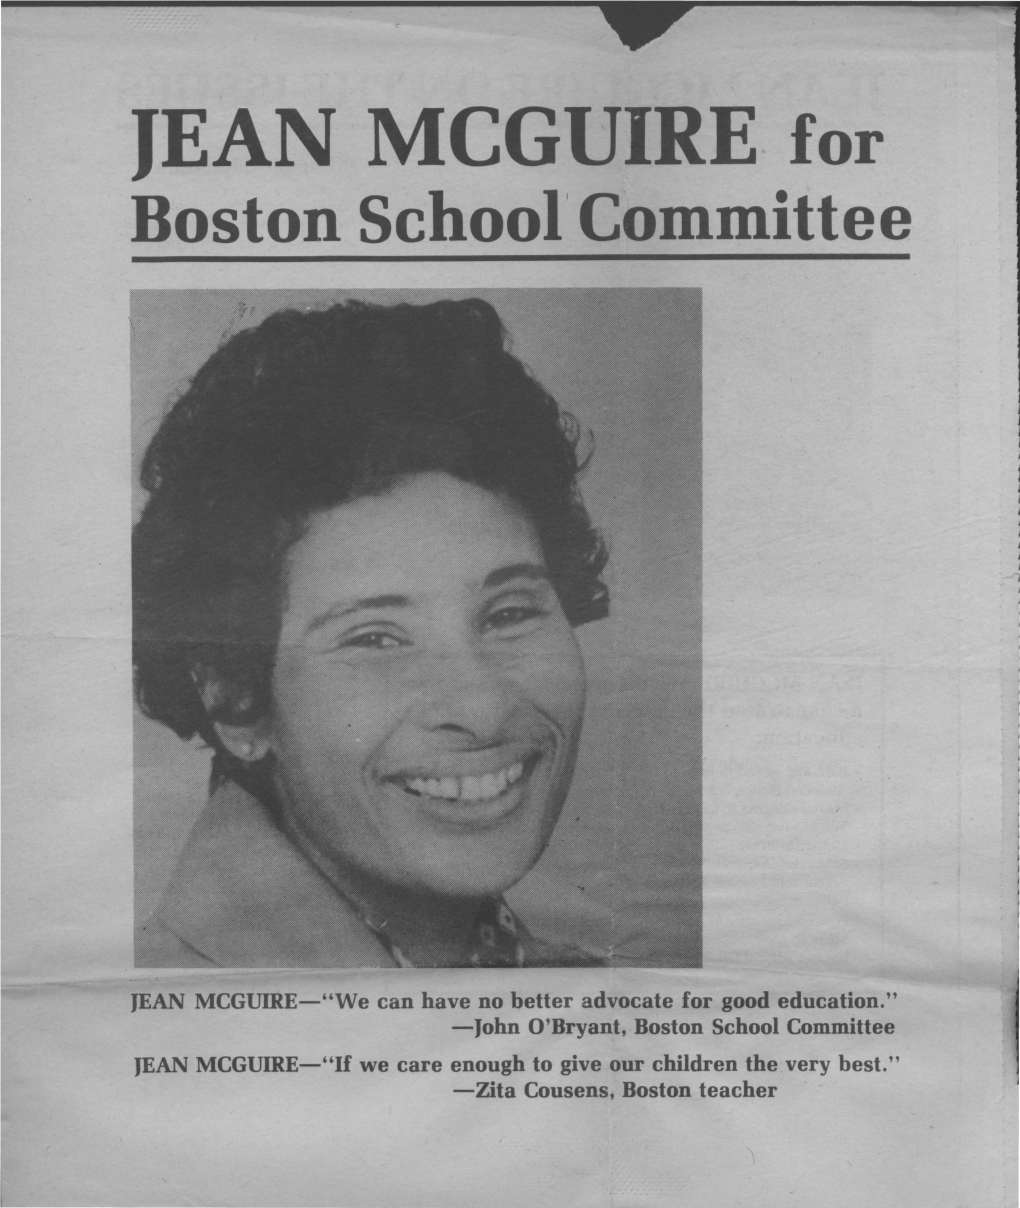 Jean Mcguire for Boston School Committee